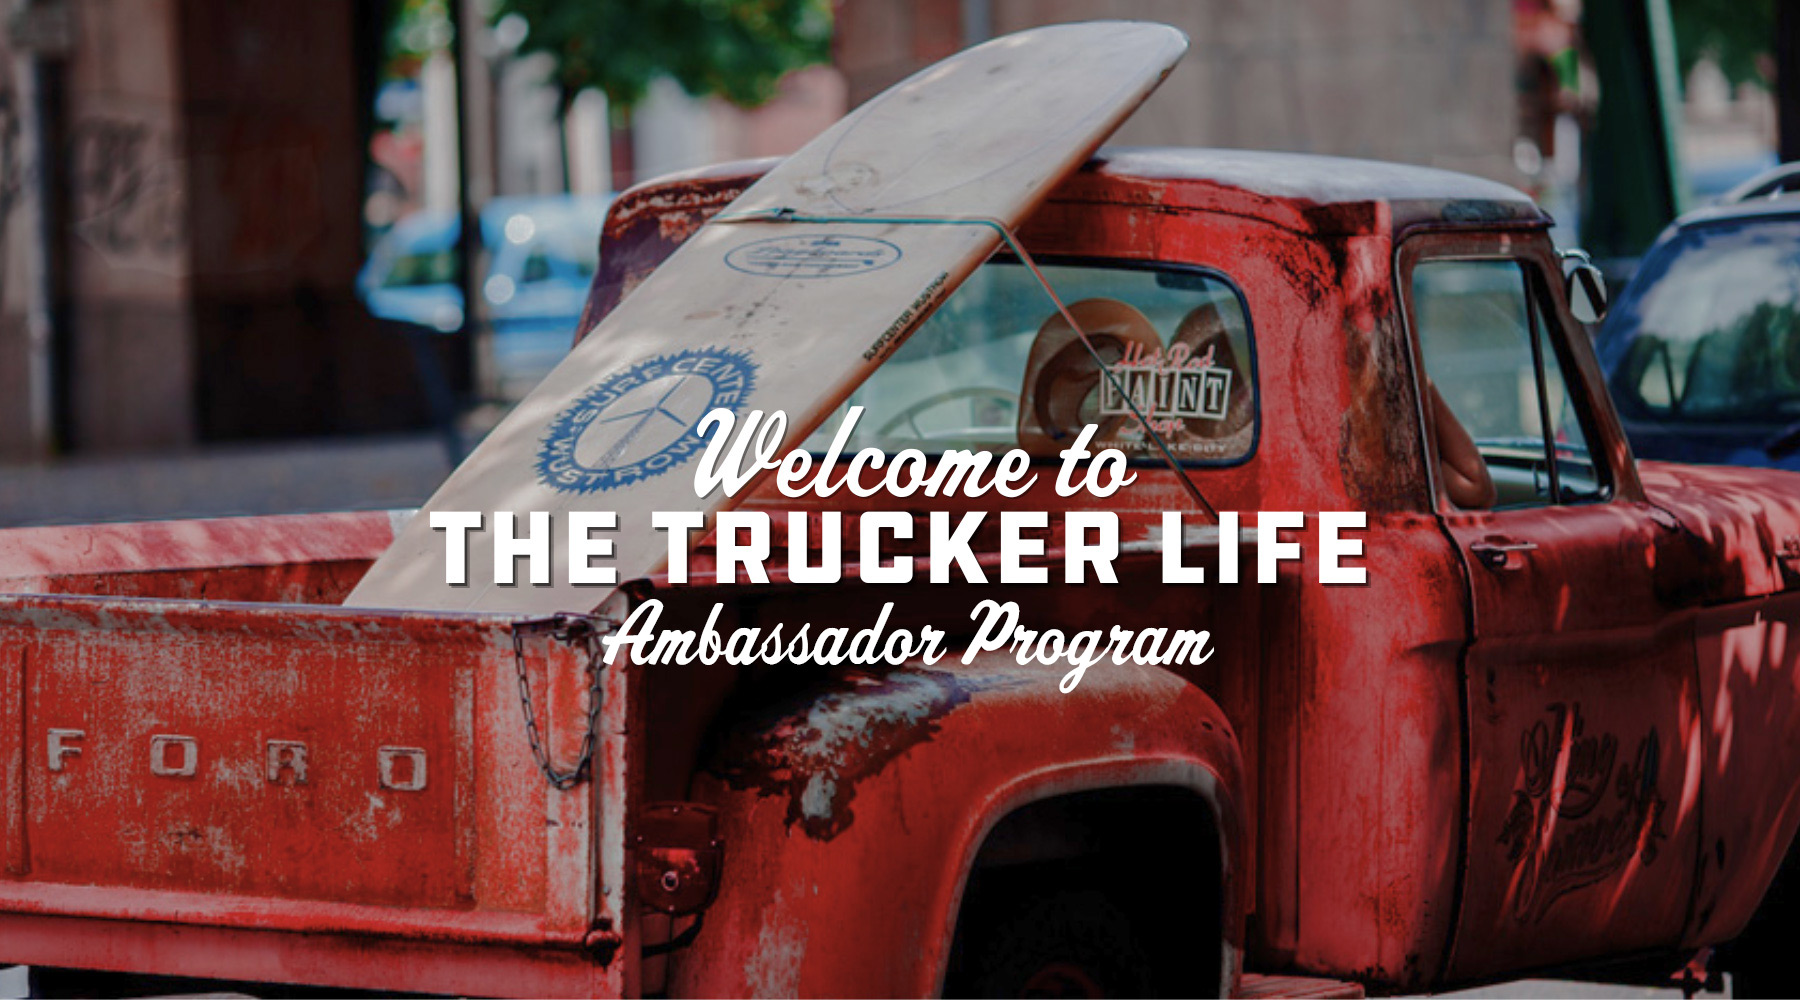 Red Truck Beer Ambassador Program